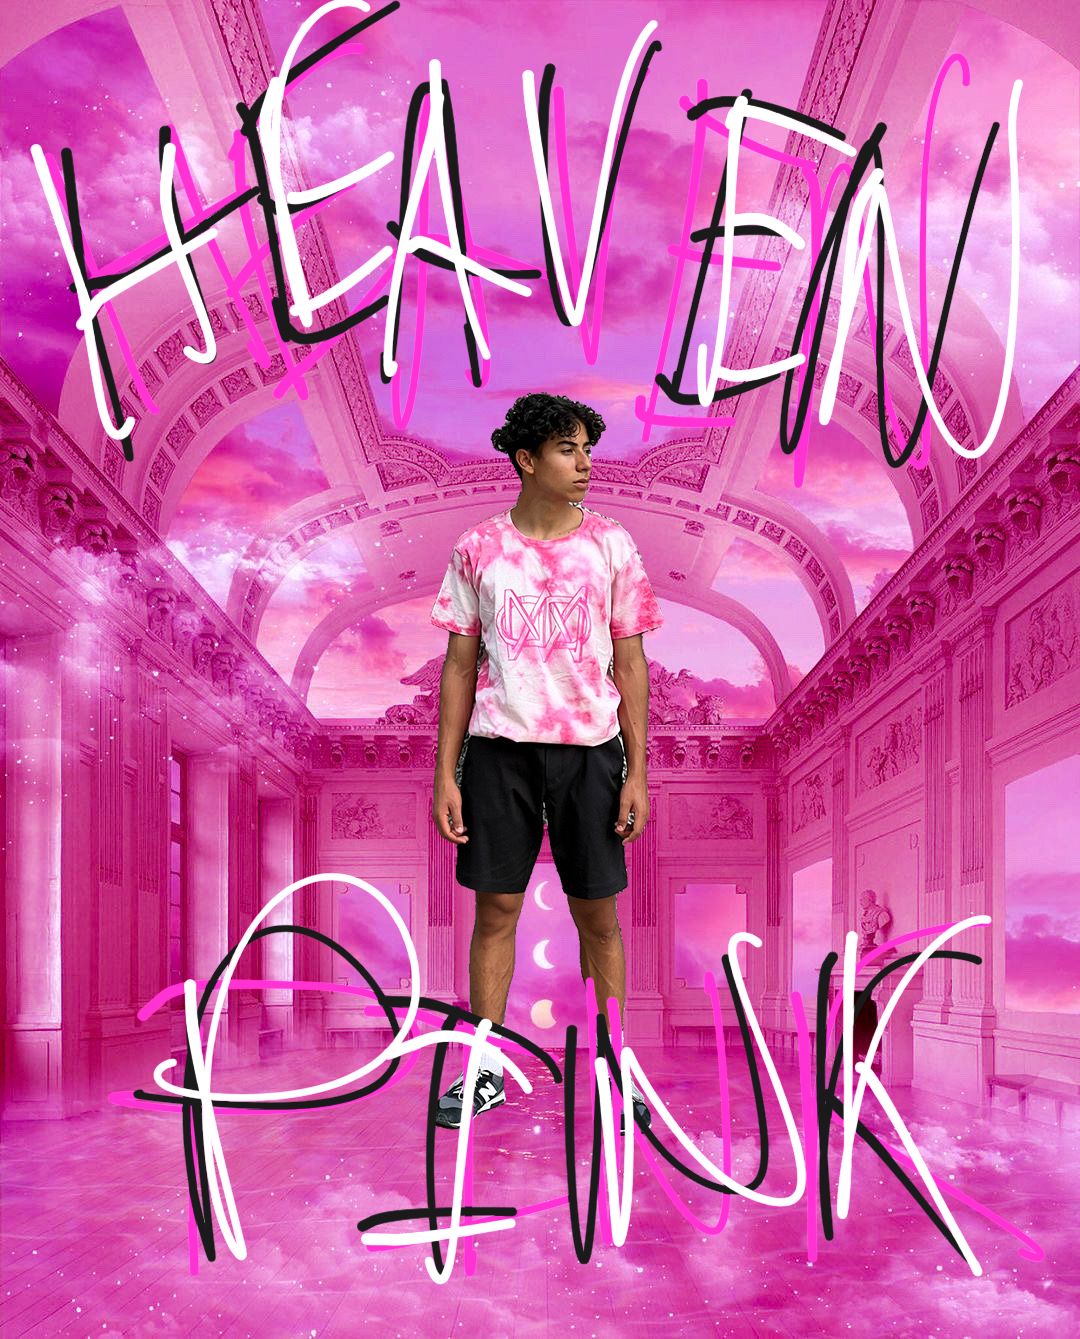 Heaven Pink TIE DYE T-shirt